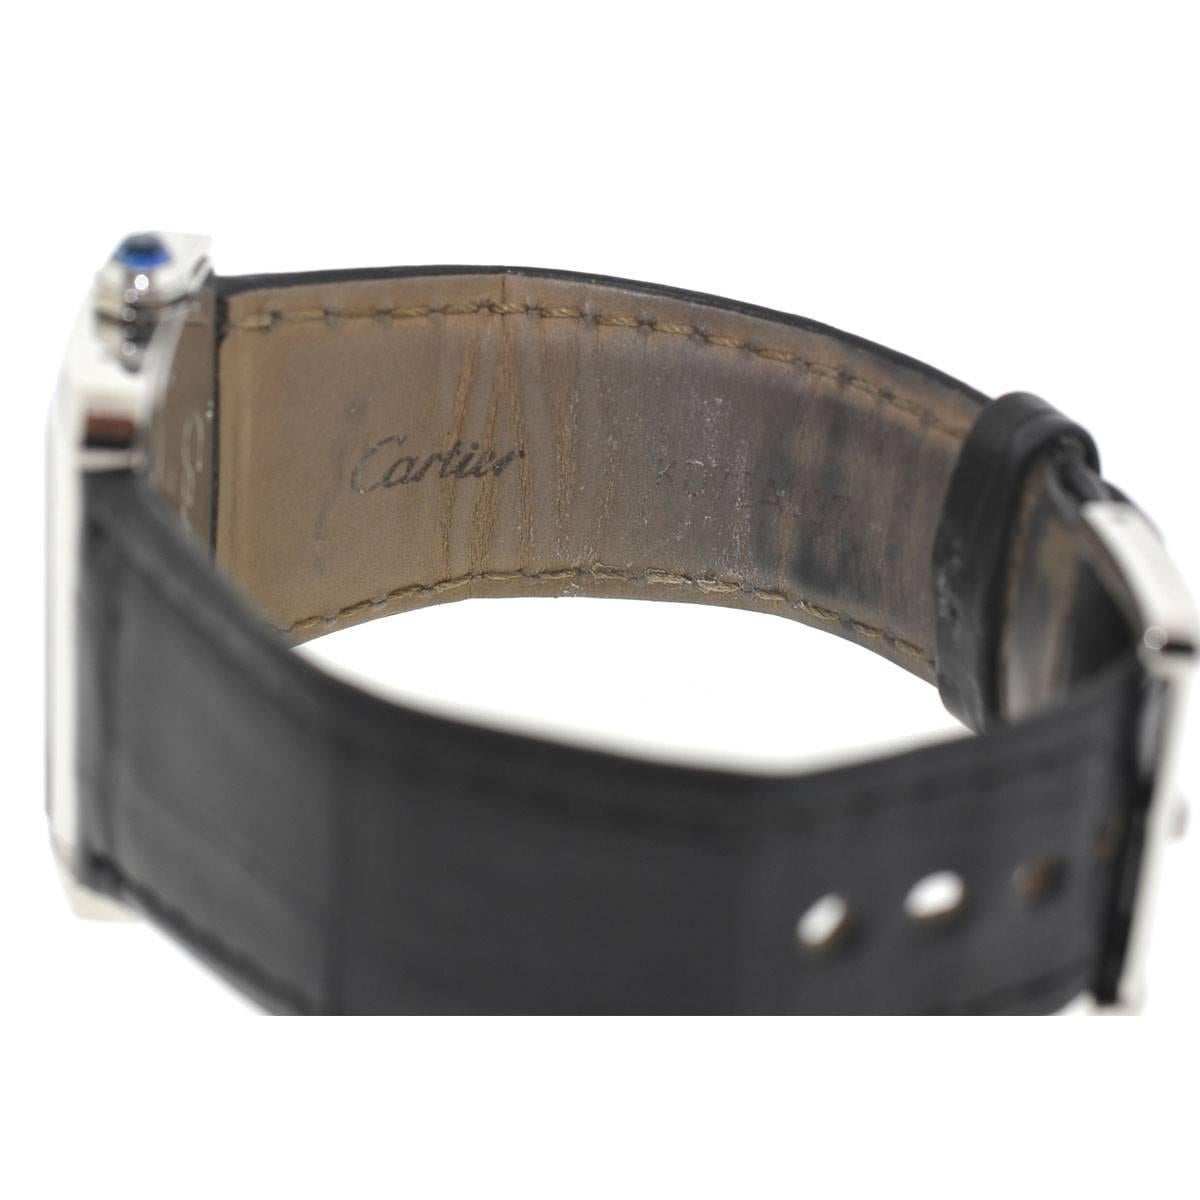 Cartier Tank Divan 2599 Stainless Steel Leather Strap Ladies Watch 2